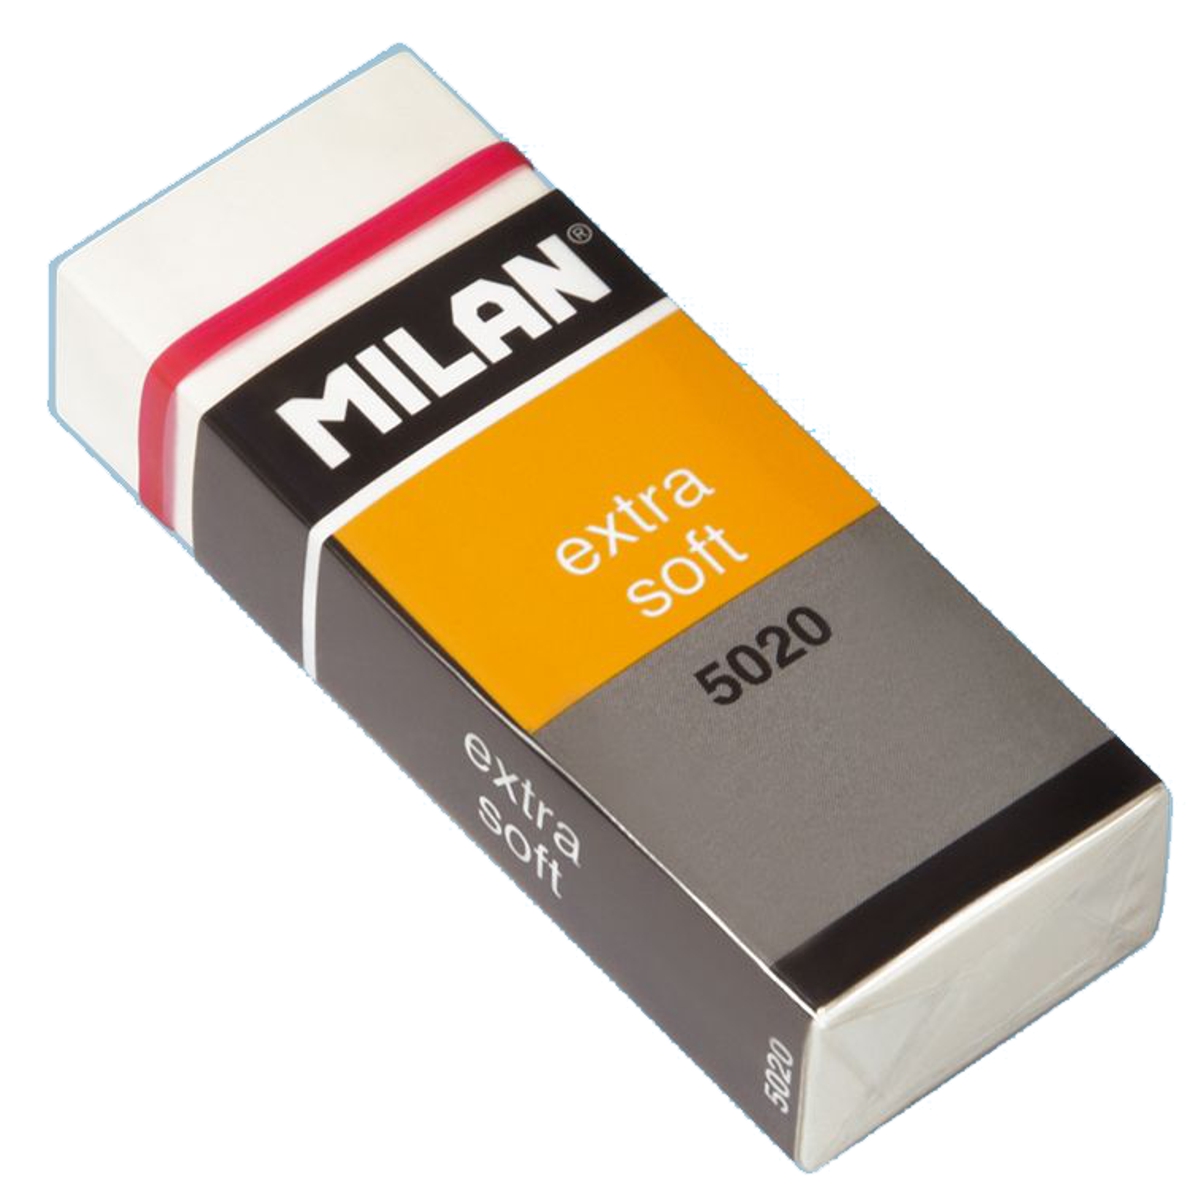 Radiera extra soft pentru creioane cu mina dura 6 1x2 3x1 2cm Milan 5020